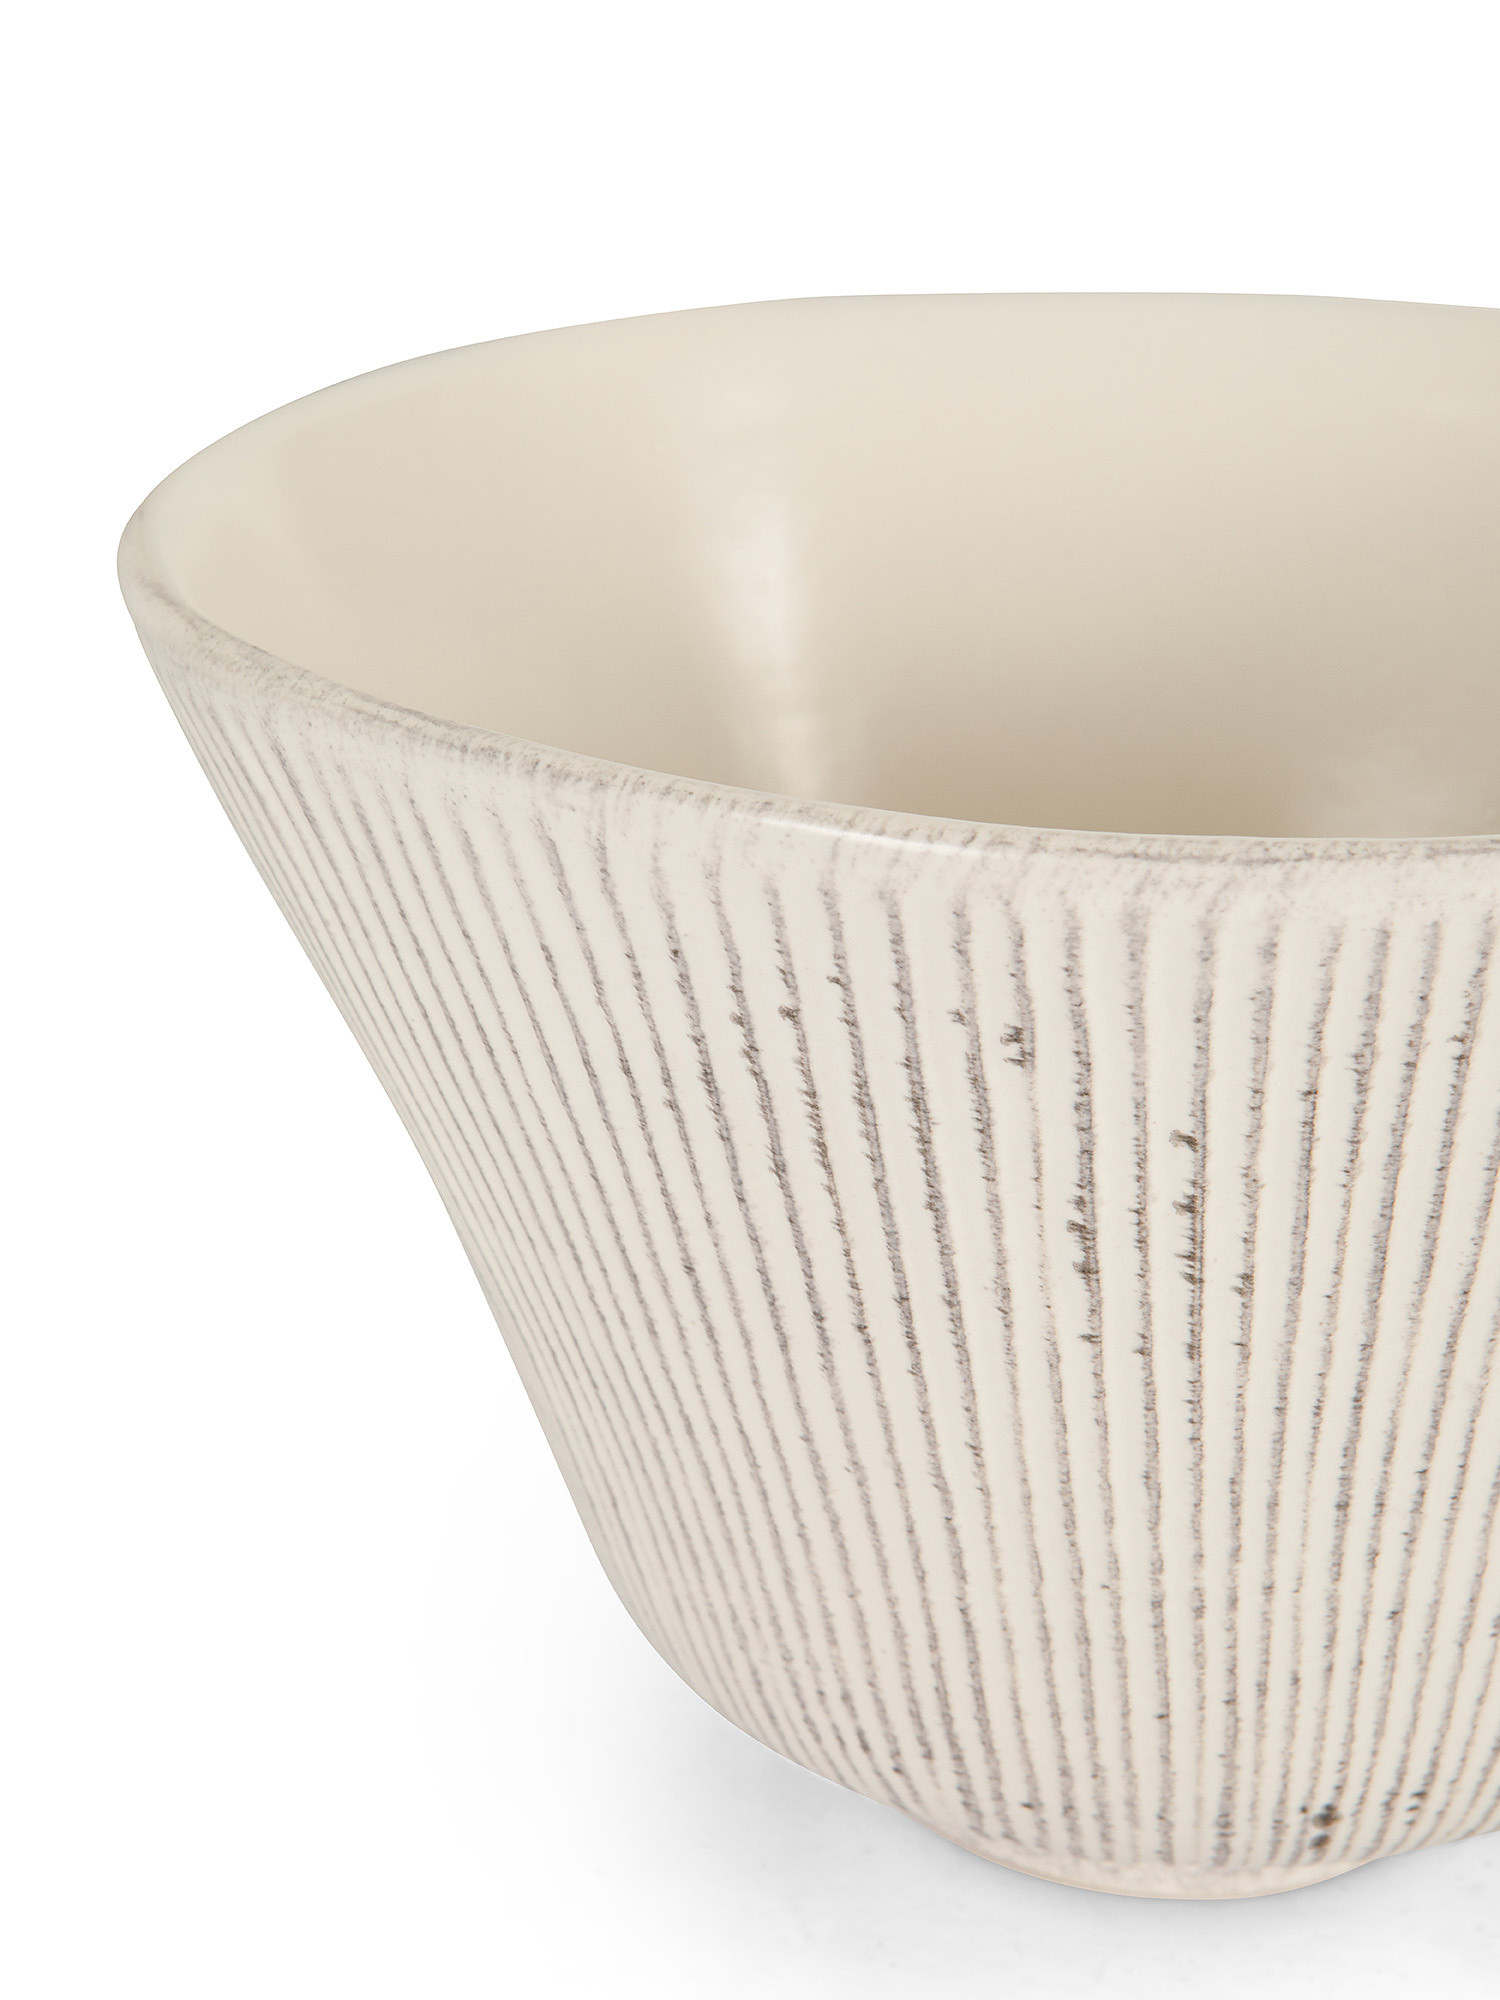 Coppa ceramica effetto rigato, Bianco, large image number 1